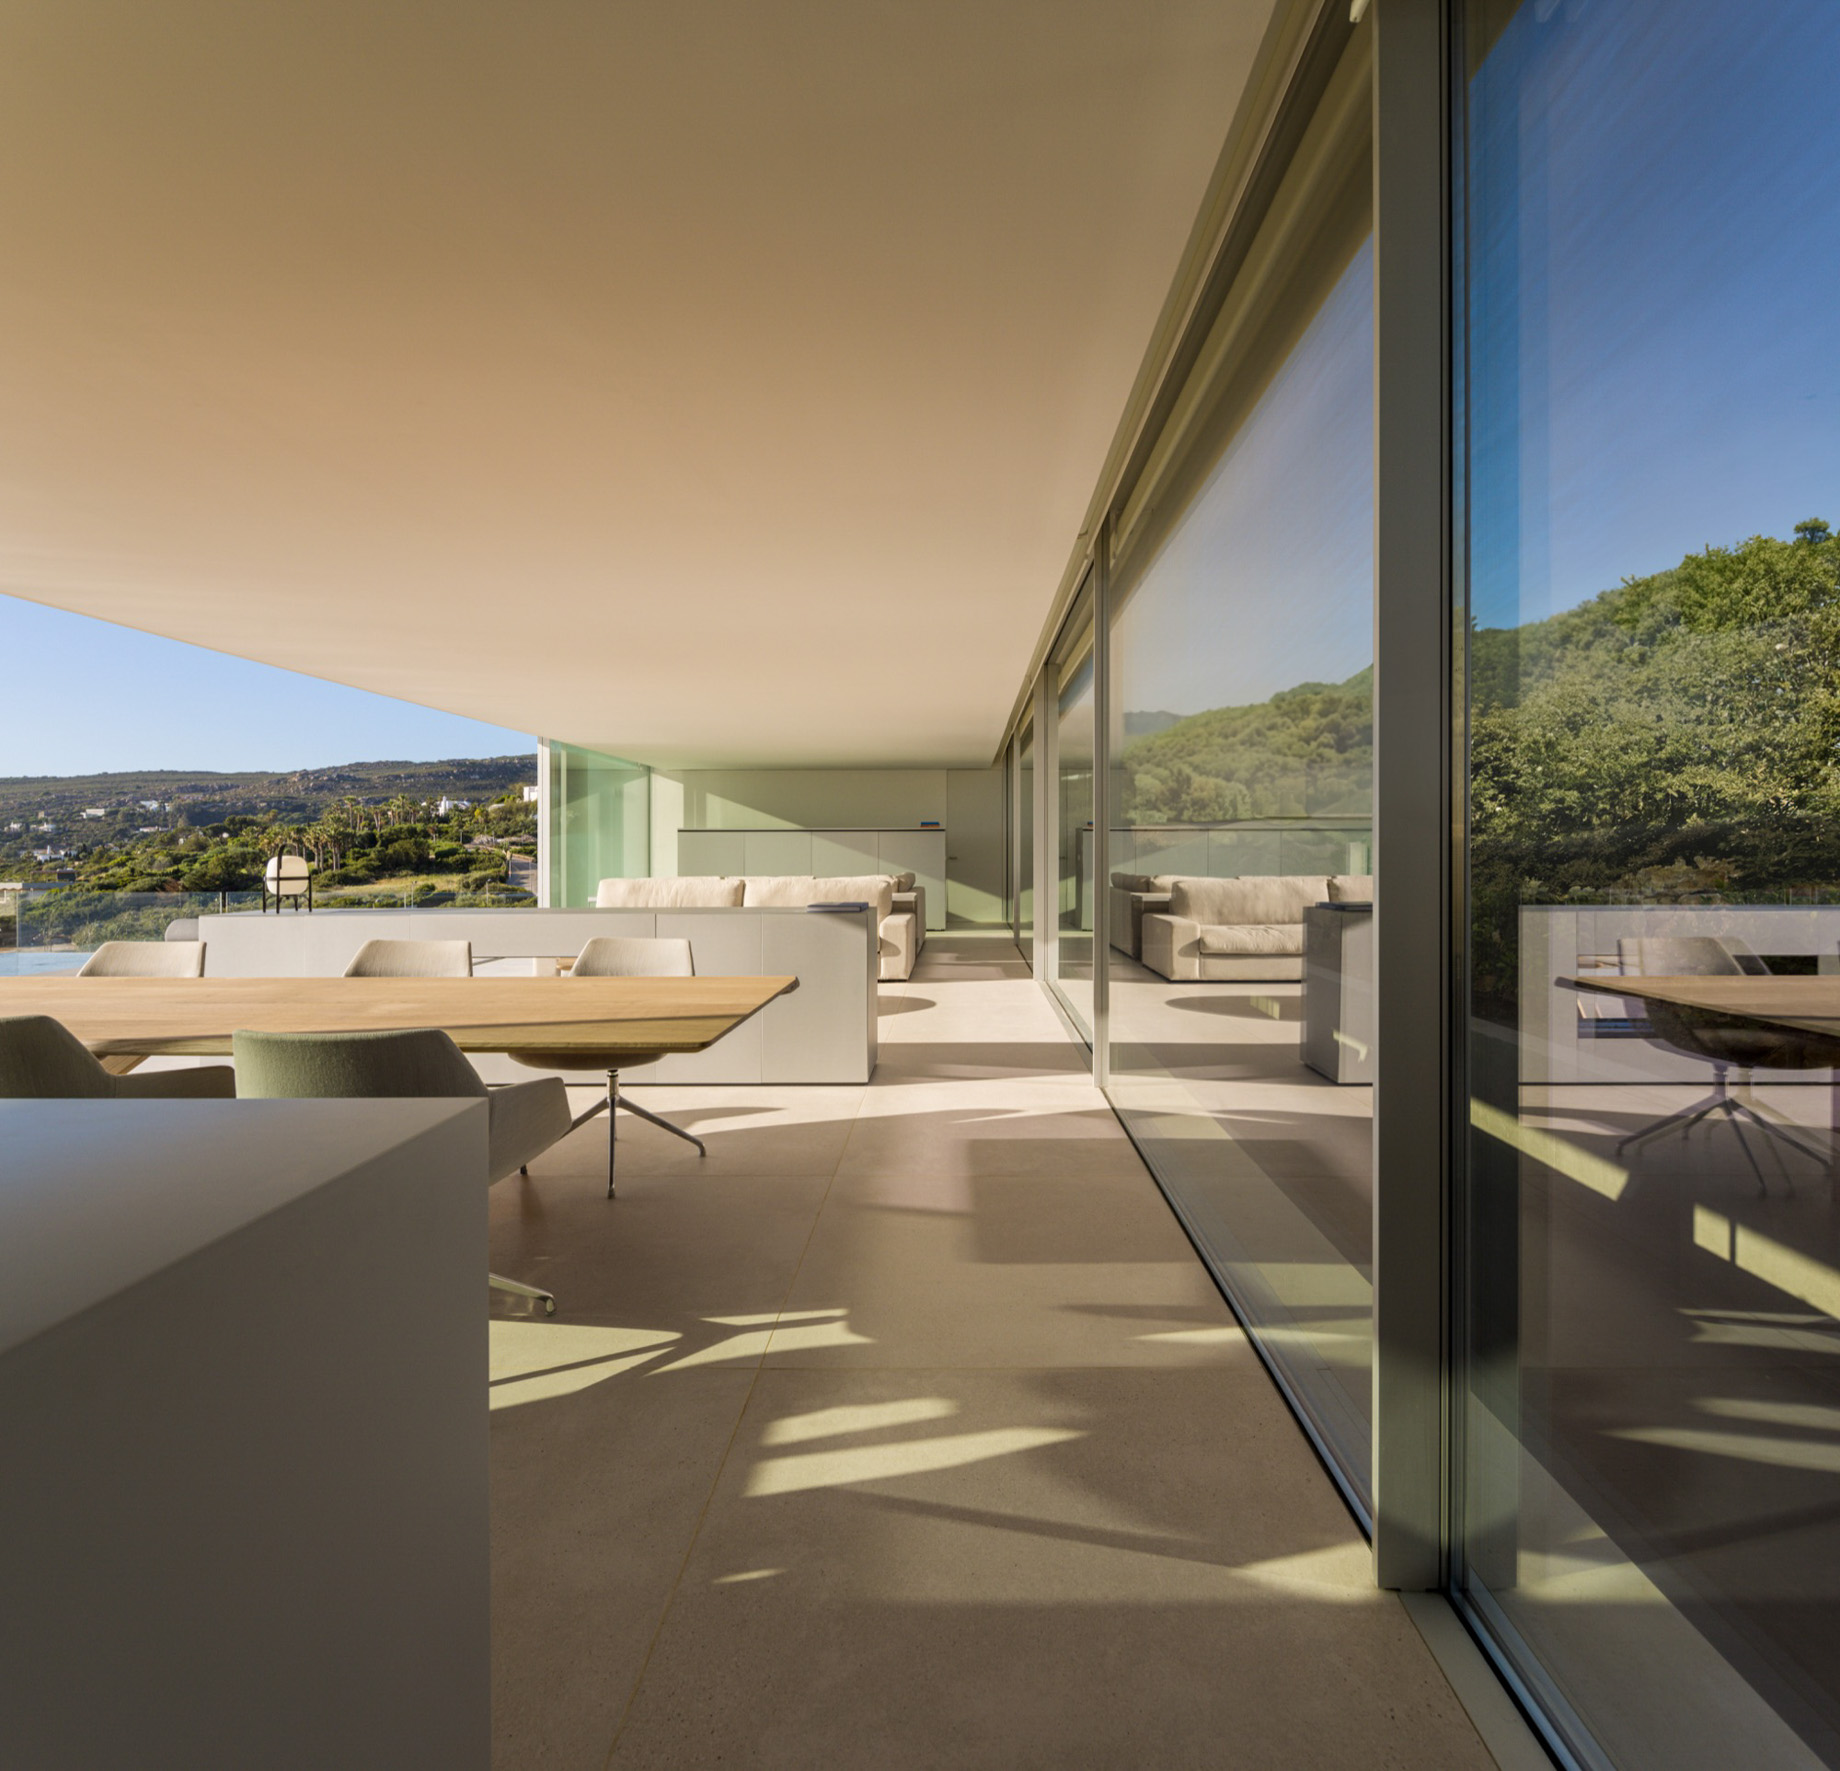 House on the Air Modern Contemporary Villa – Zahara de los Atunes, Spain – 33